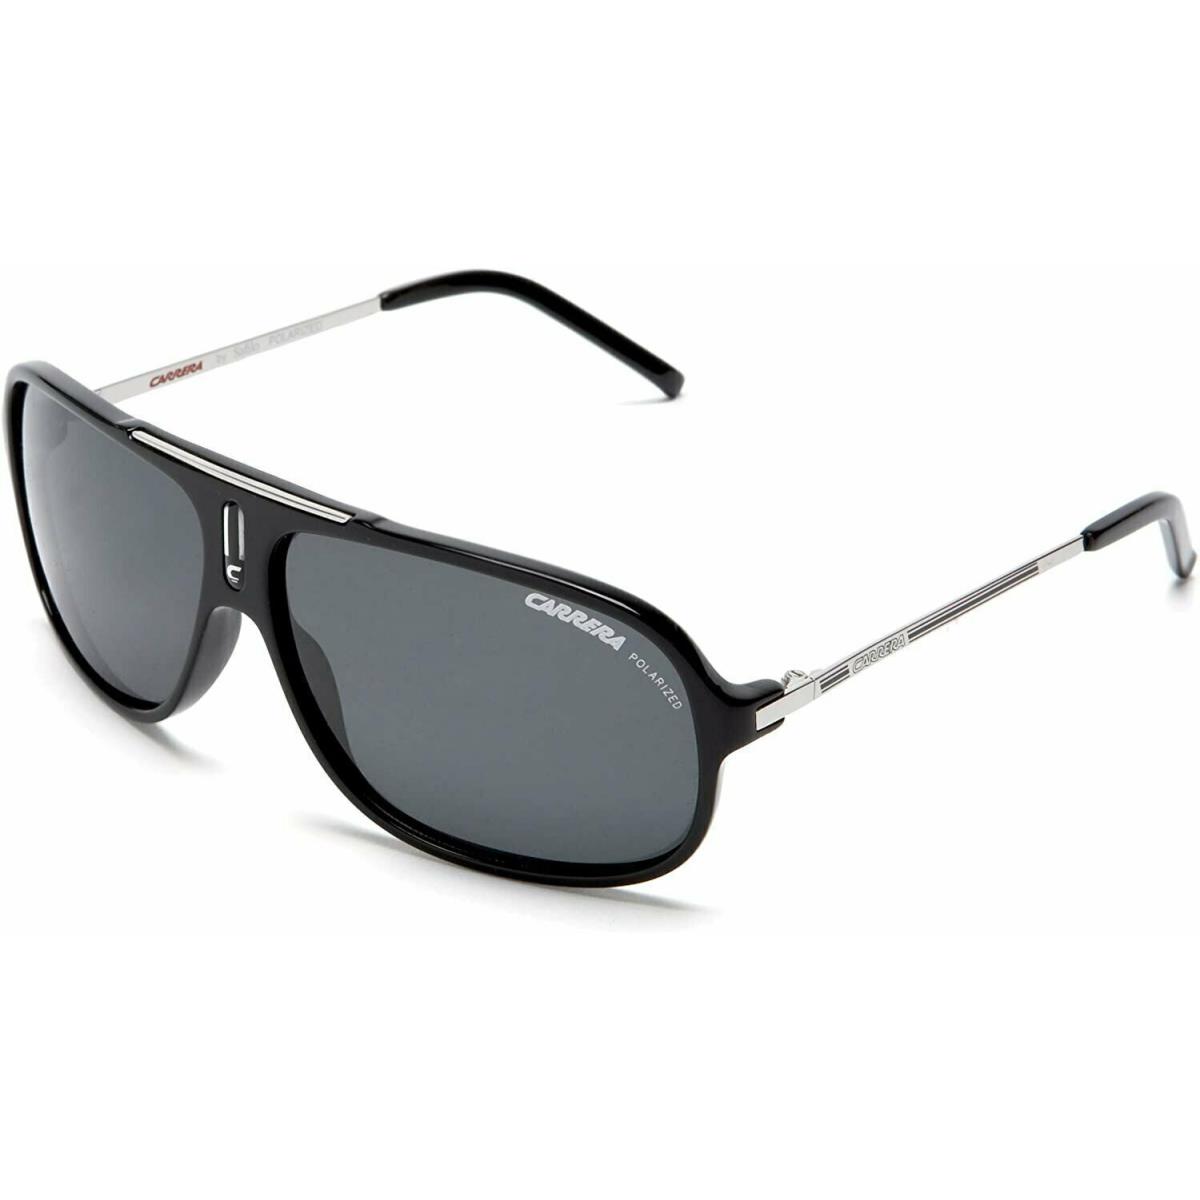 Carrera Cool Csa RA Sunglasses Black Palladium Frame Grey Polarized Lens 65mm - Frame: Black Palladium, Lens: Gray